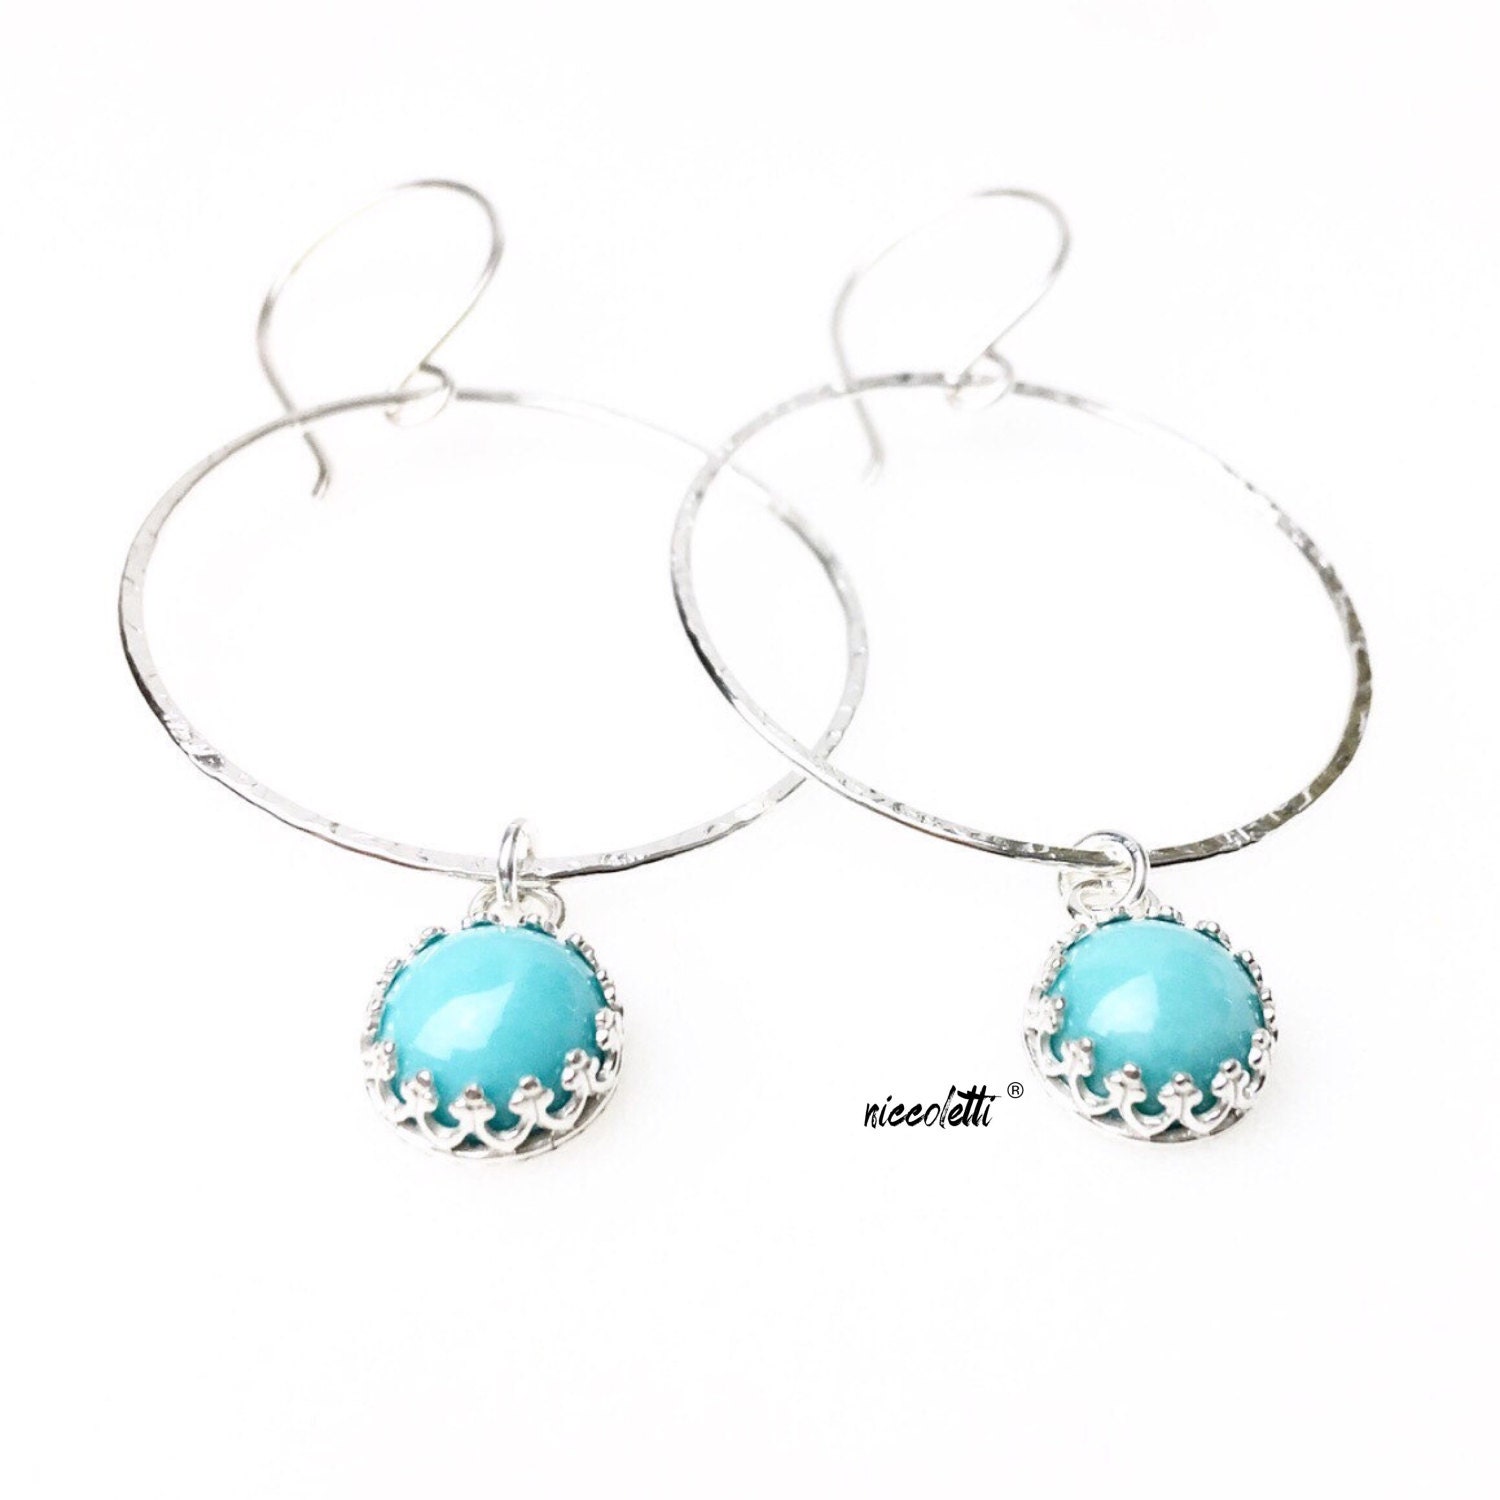 Genuine Turquoise Hoop Earrings / Eternity Hoops / Textured Circle Earrings / Minimalist Jewelry Gifts for Her / Boho Turquoise Dangles